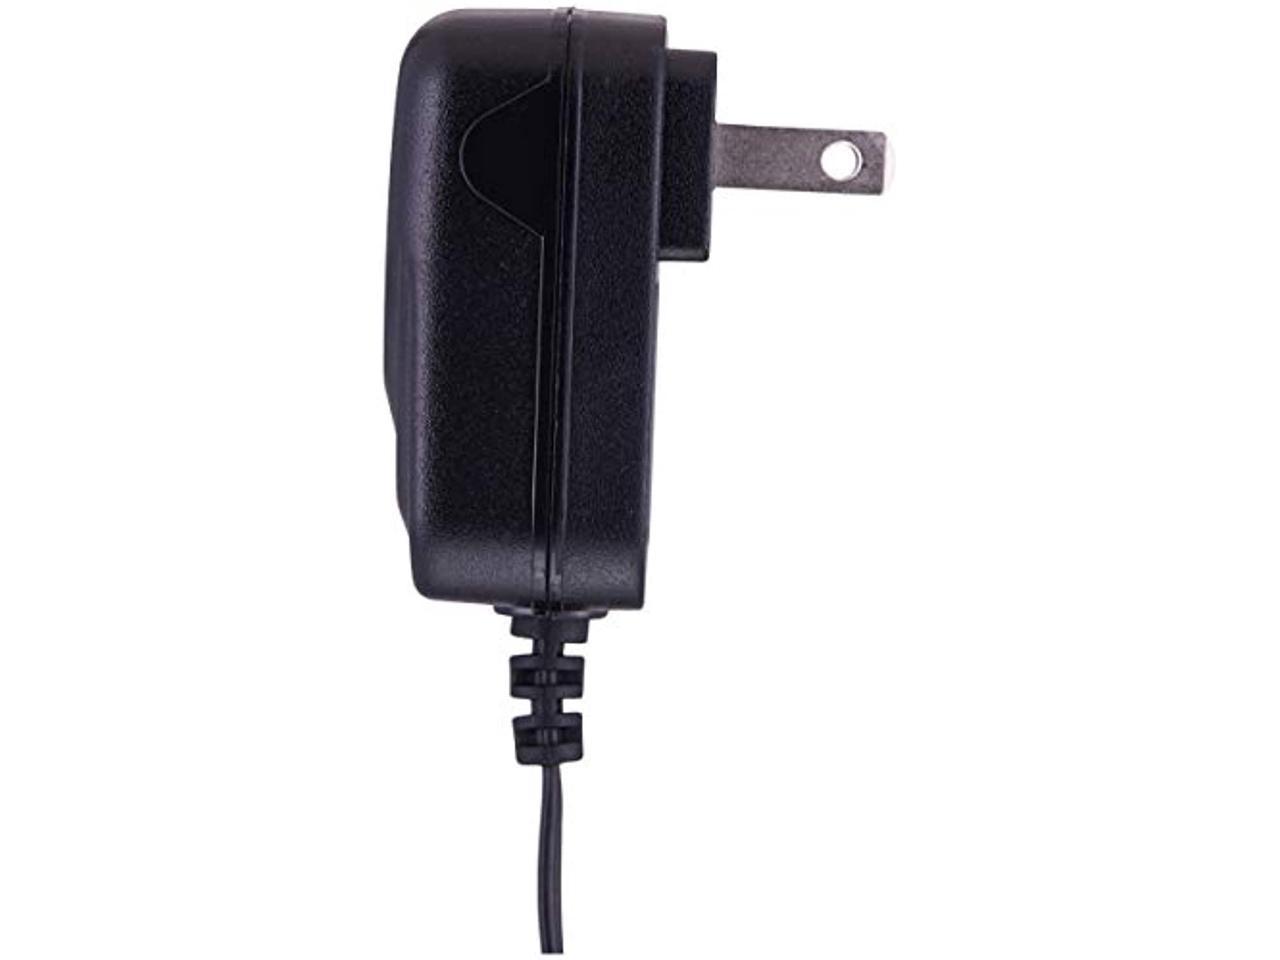 onn ona18ca007 universal camera battery charger, black - Newegg.com